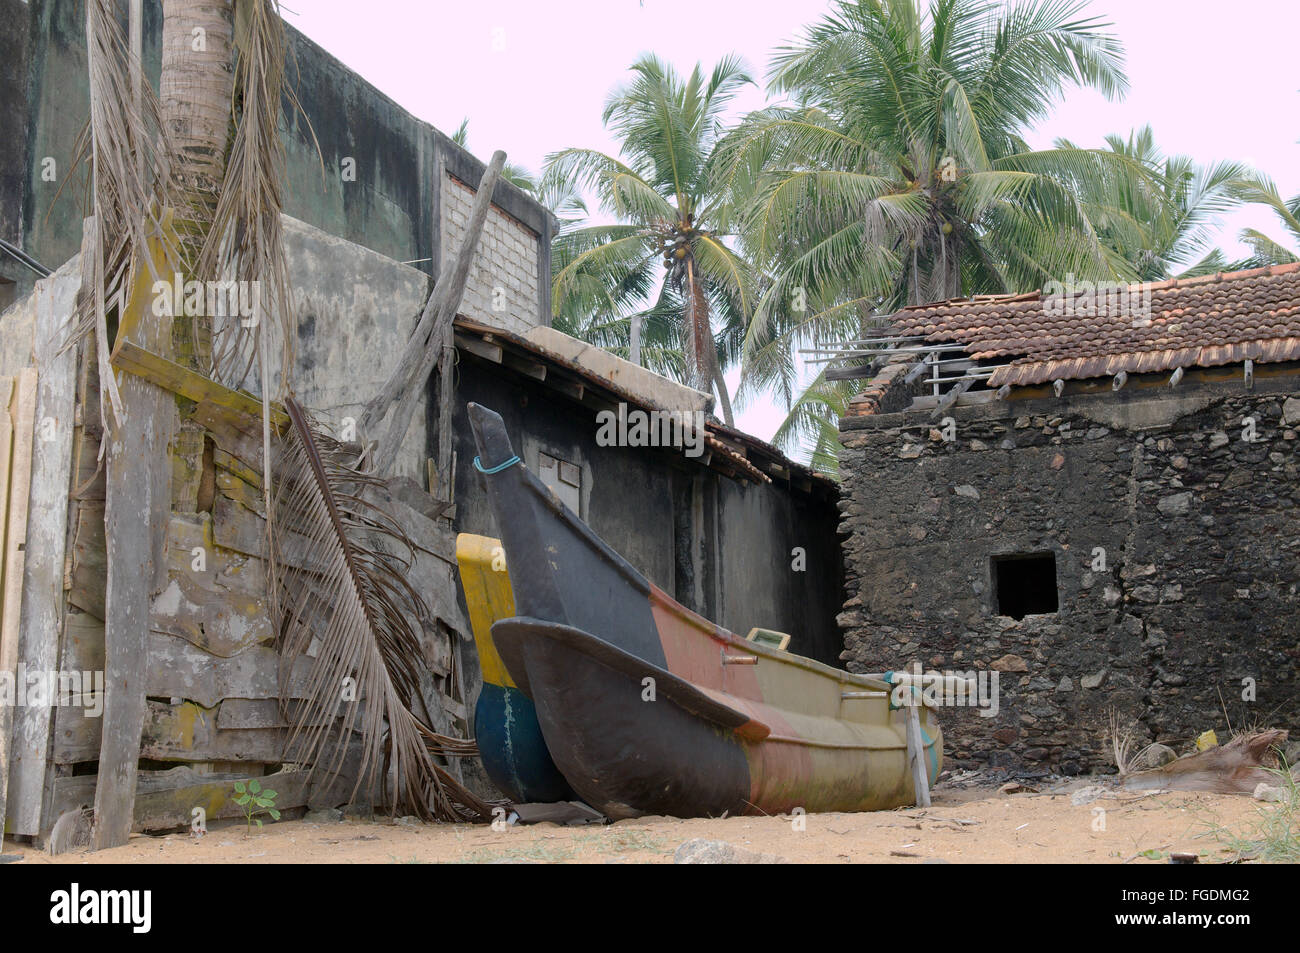 Catamarán tradicional barco de pesca de Sri Lanka se encuentra cerca de la cabaña, Hikkaduwa, Sri Lanka, el sur de Asia Foto de stock